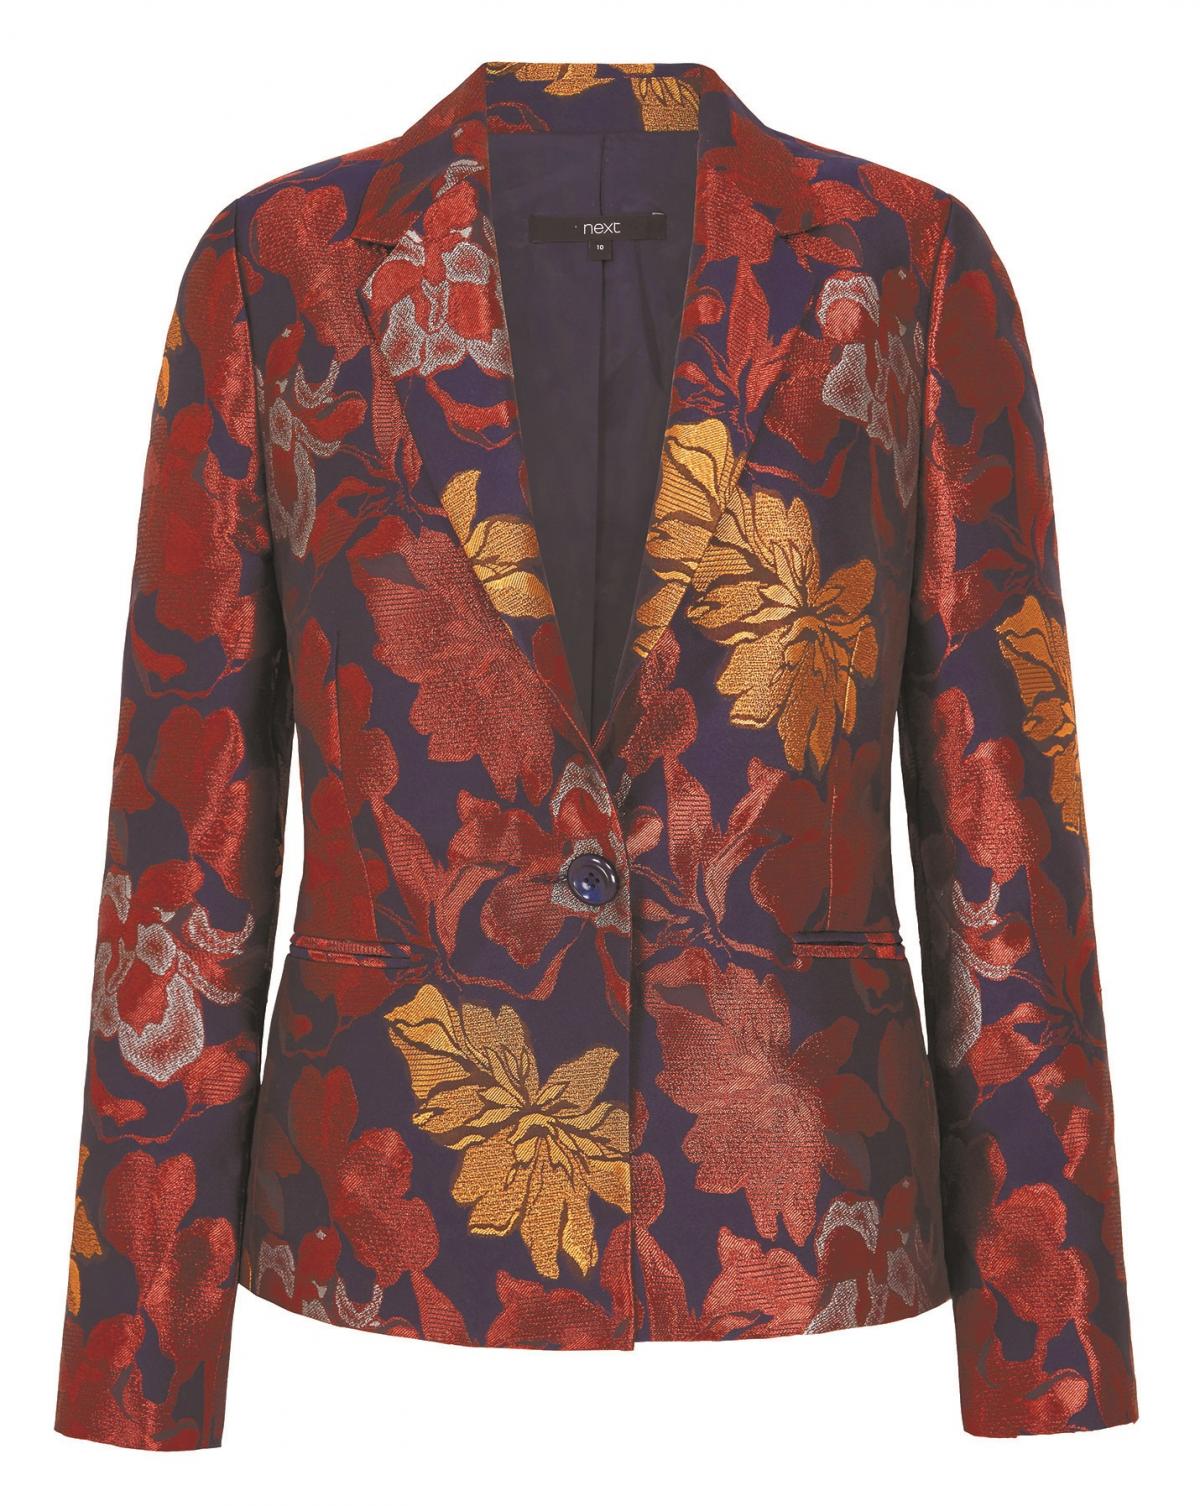 Next, Floral Jacquard Jacket, £65